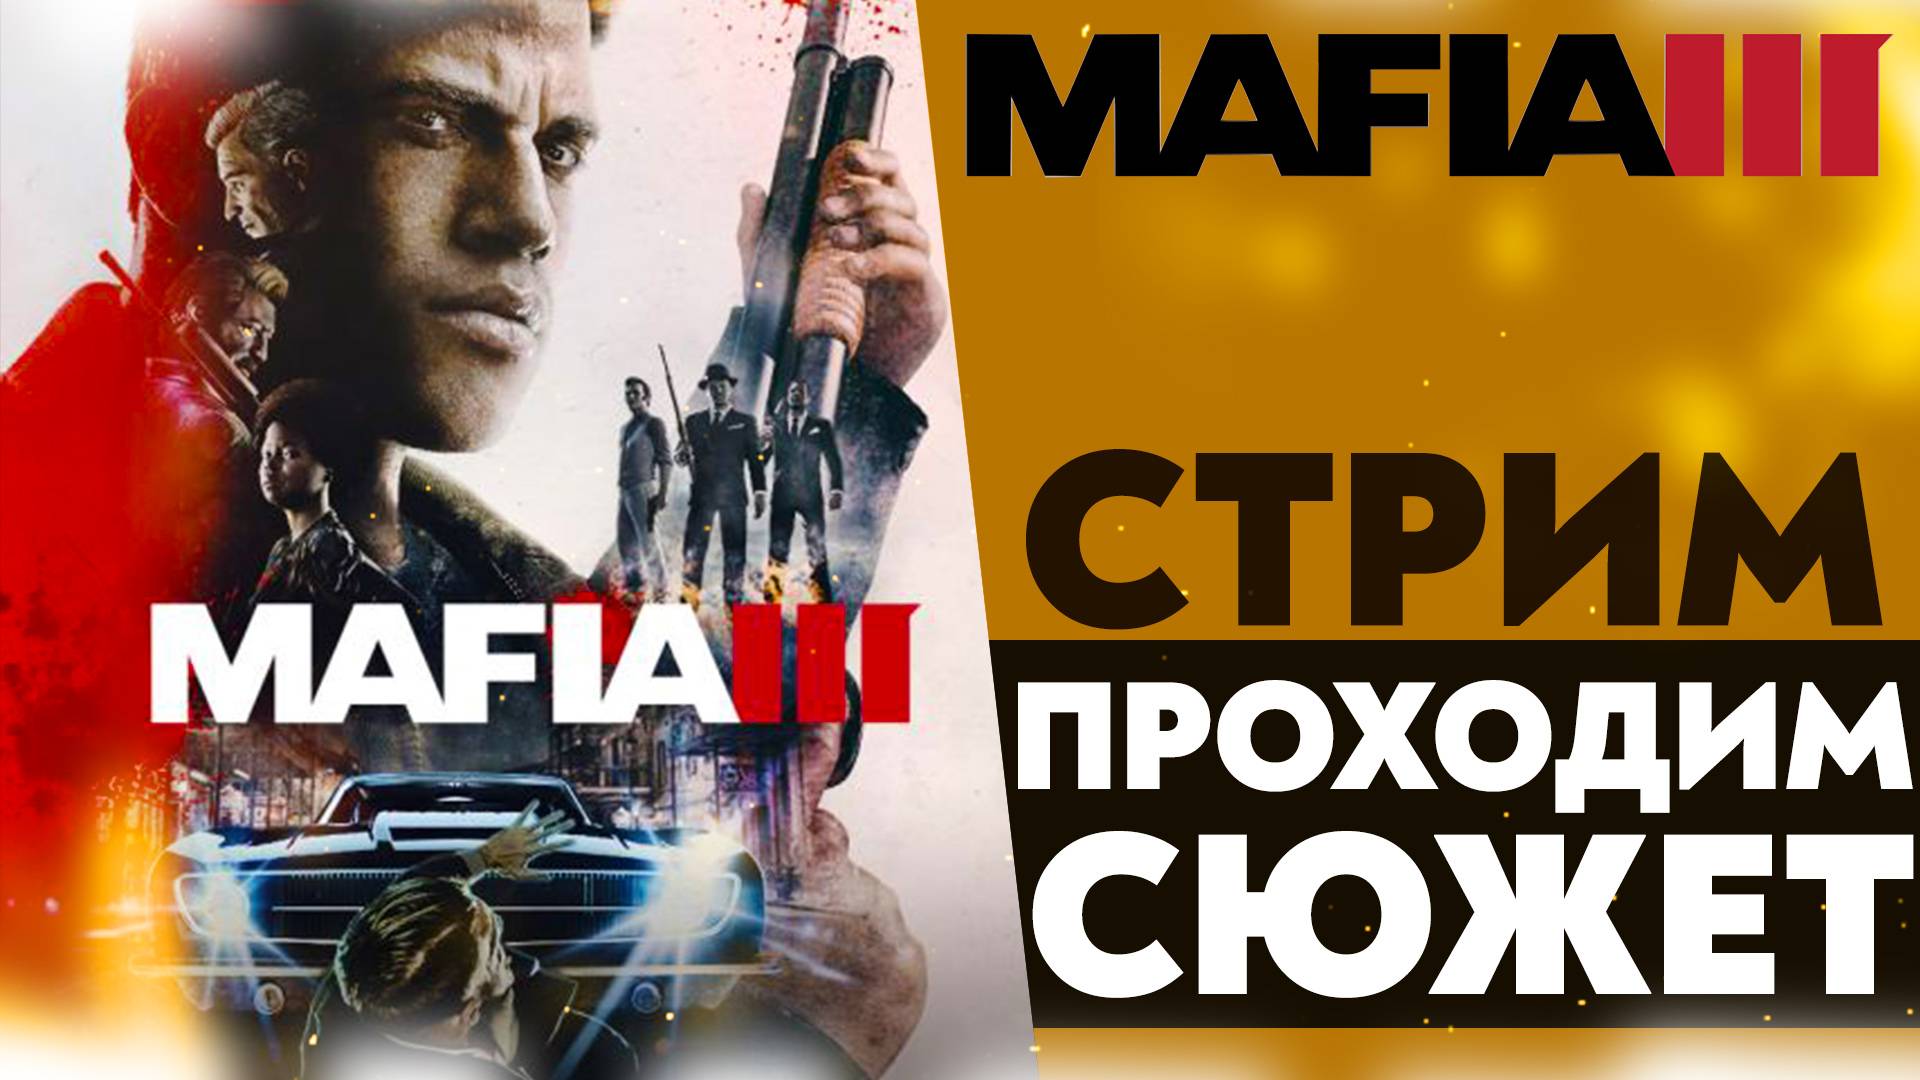 🔴 НАЧАЛО ПРОХОЖДЕНИЯ ОСНОВНОГО СЮЖЕТА МАФИИ 3 (Mafia III #1)